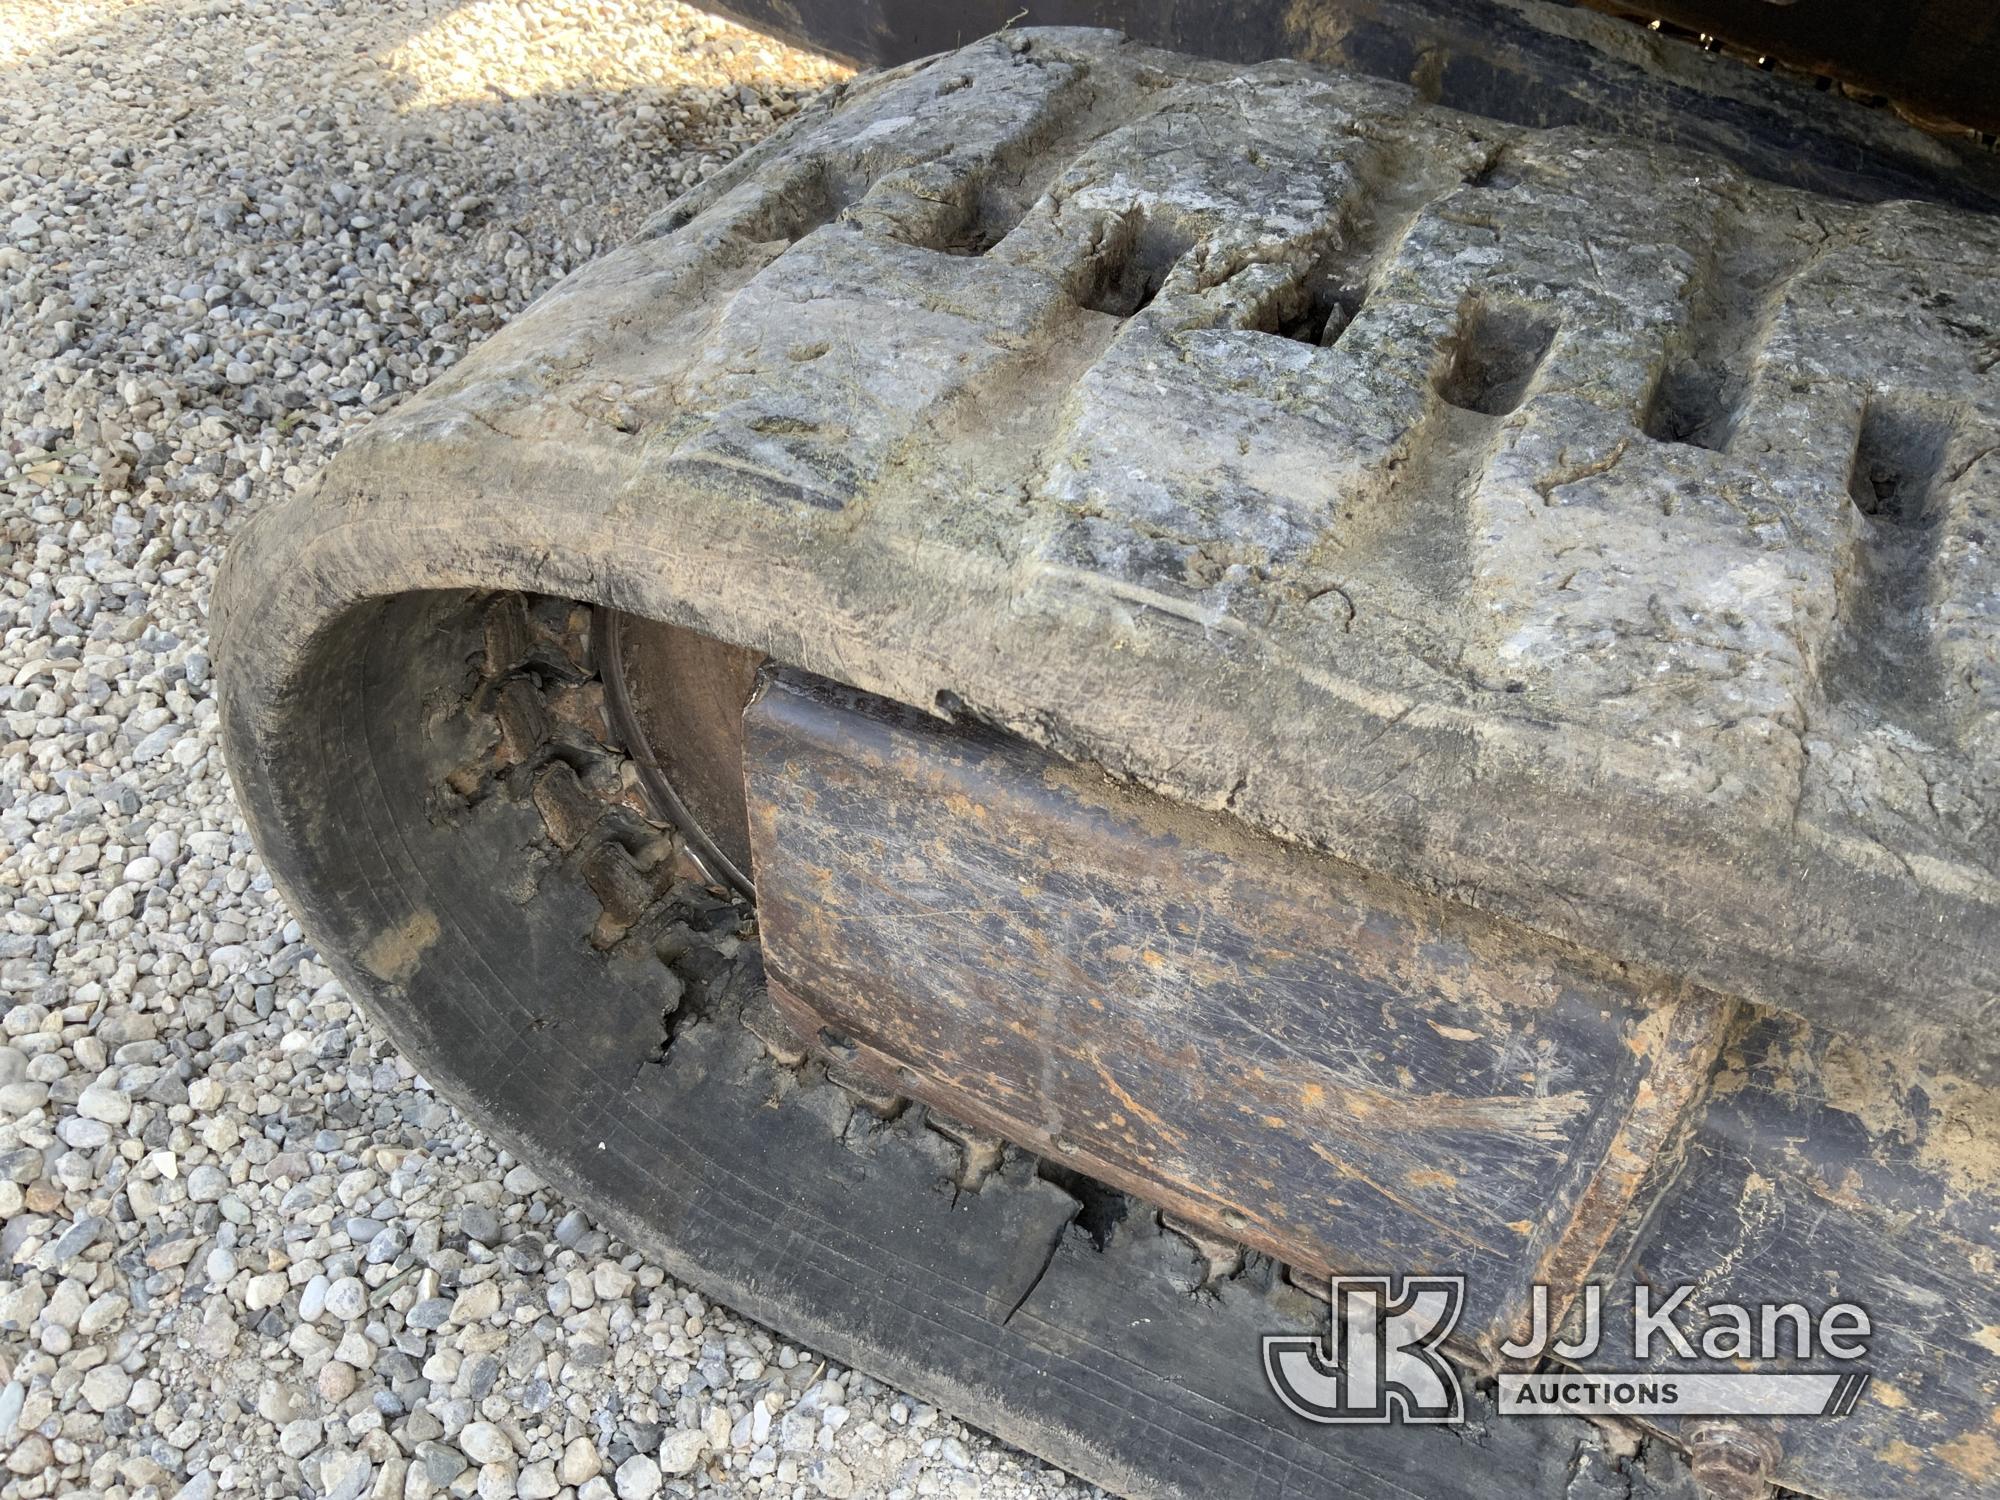 (Pasco, WA) Kubota KX121-3S Mini Hydraulic Excavator Runs, Moves & Operates